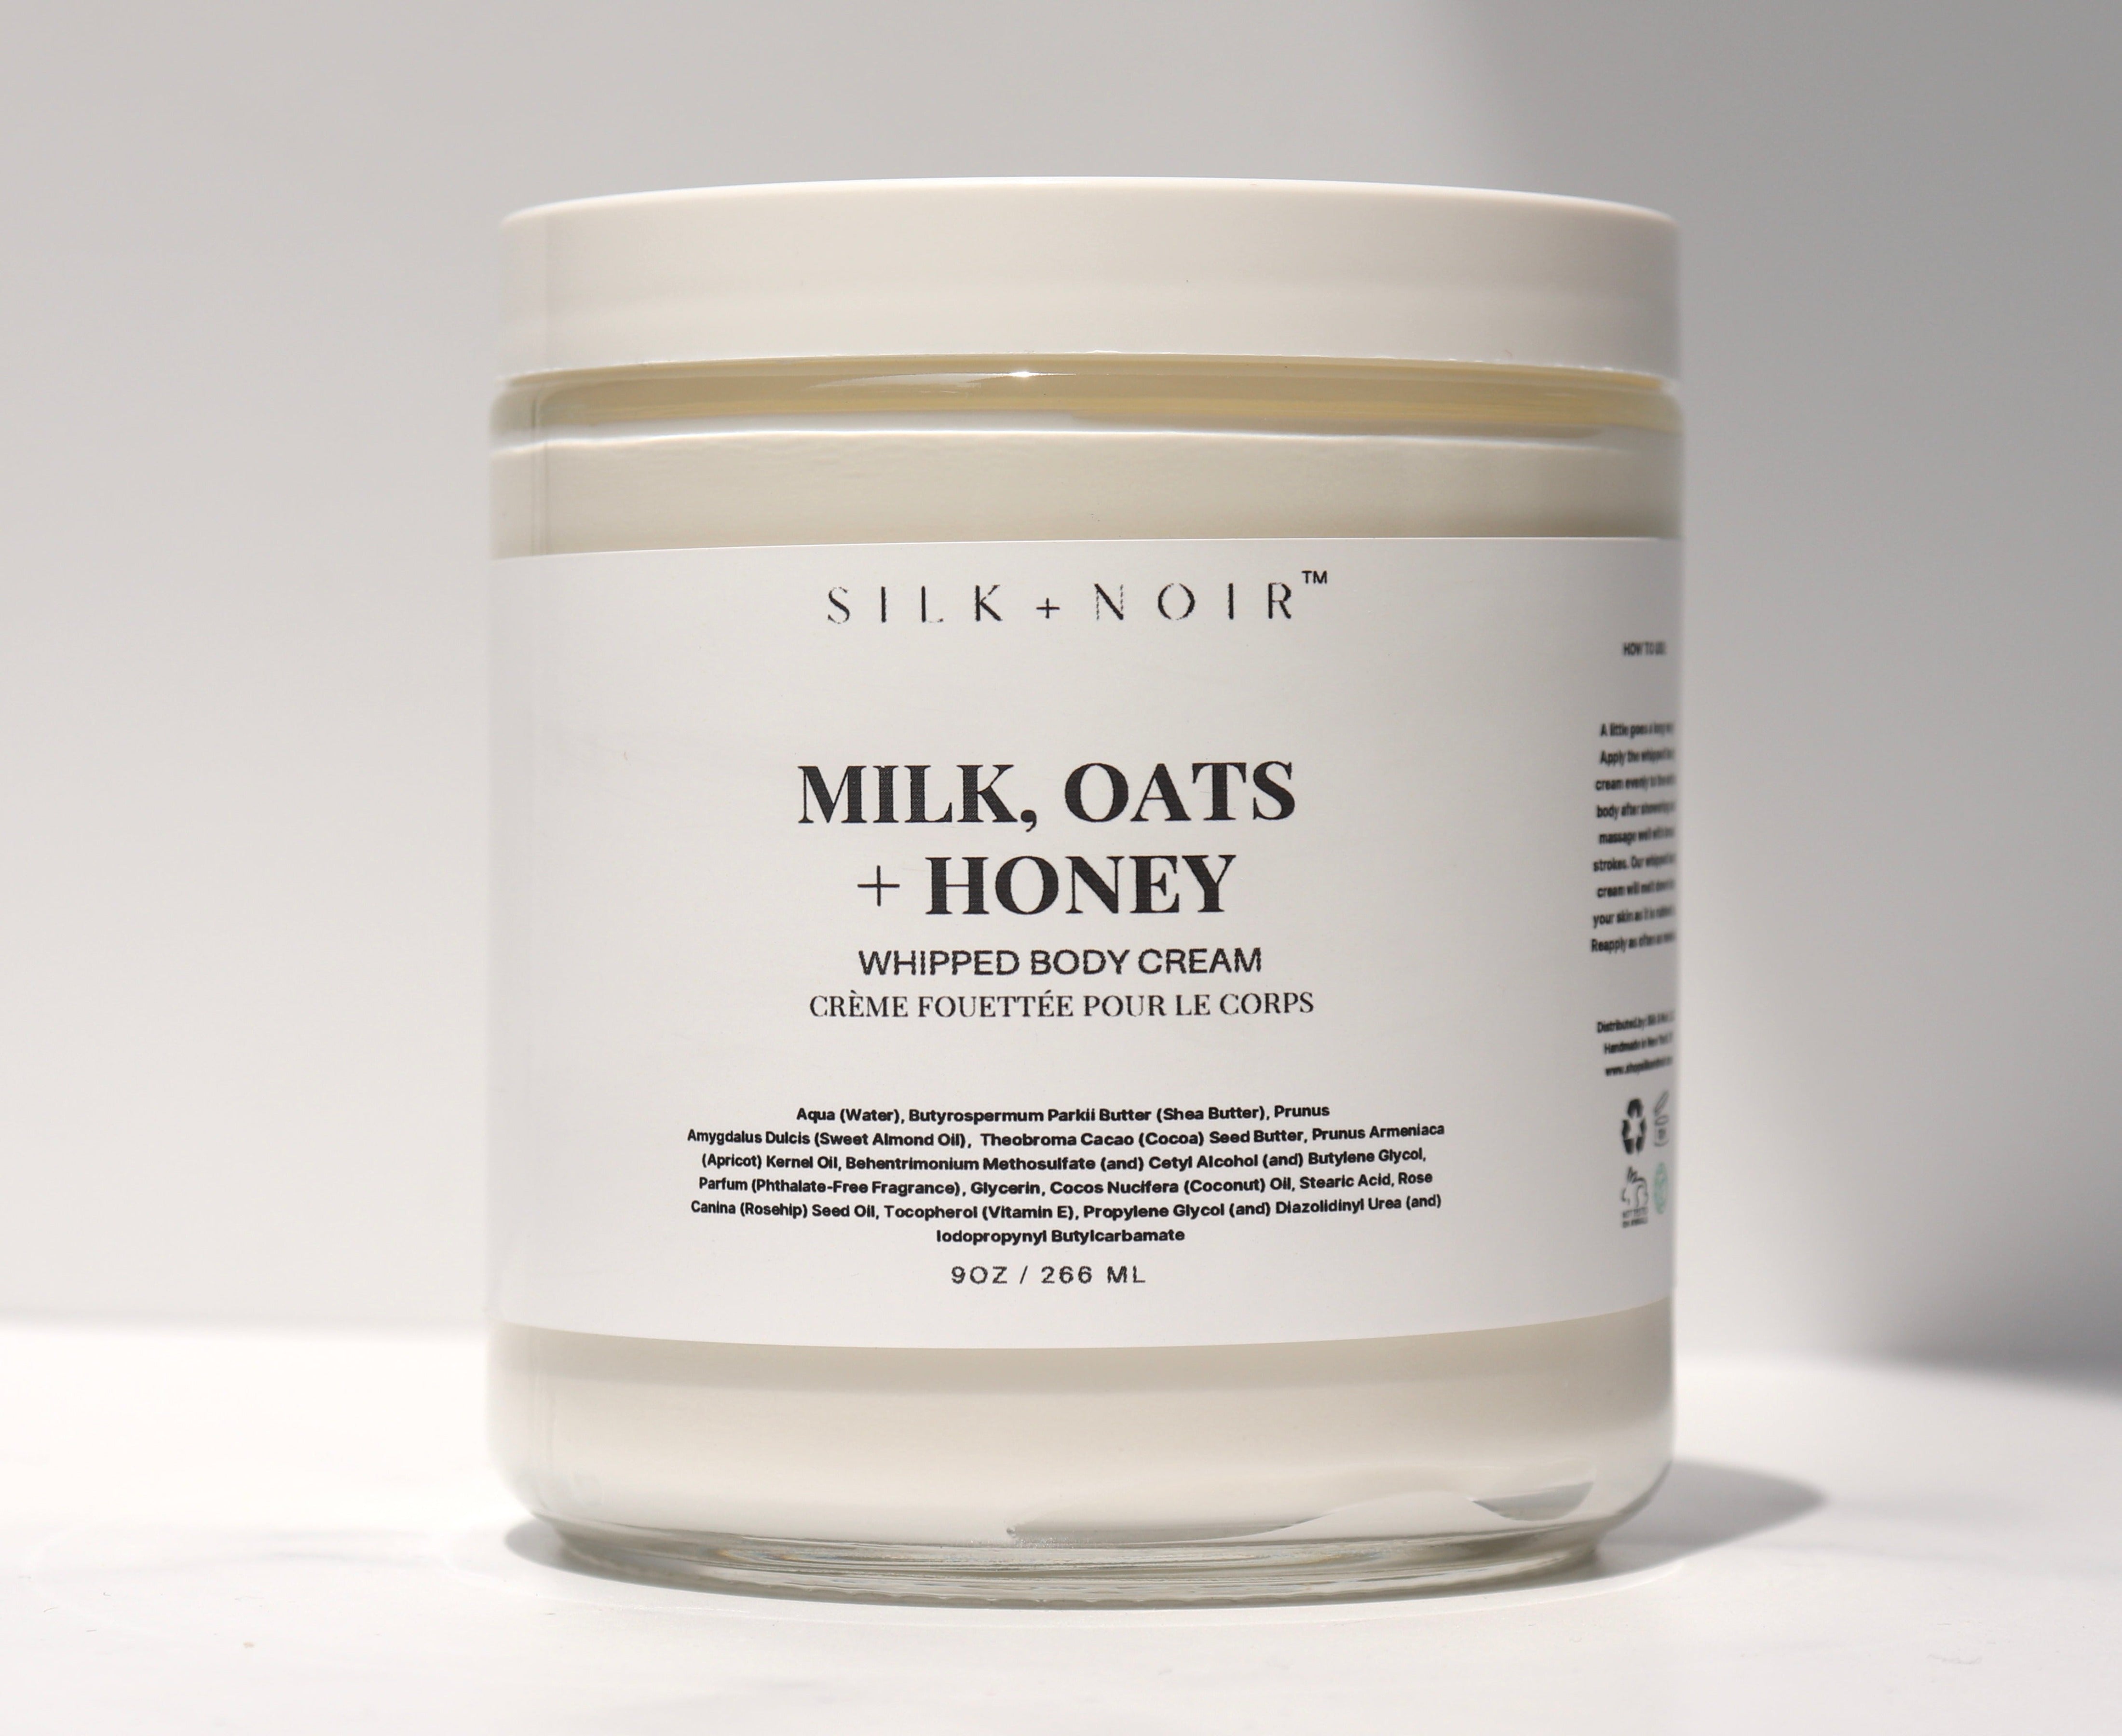 Silk Plus Oats & Olive Body Lotion with Honey & Almond Milk – Nimson